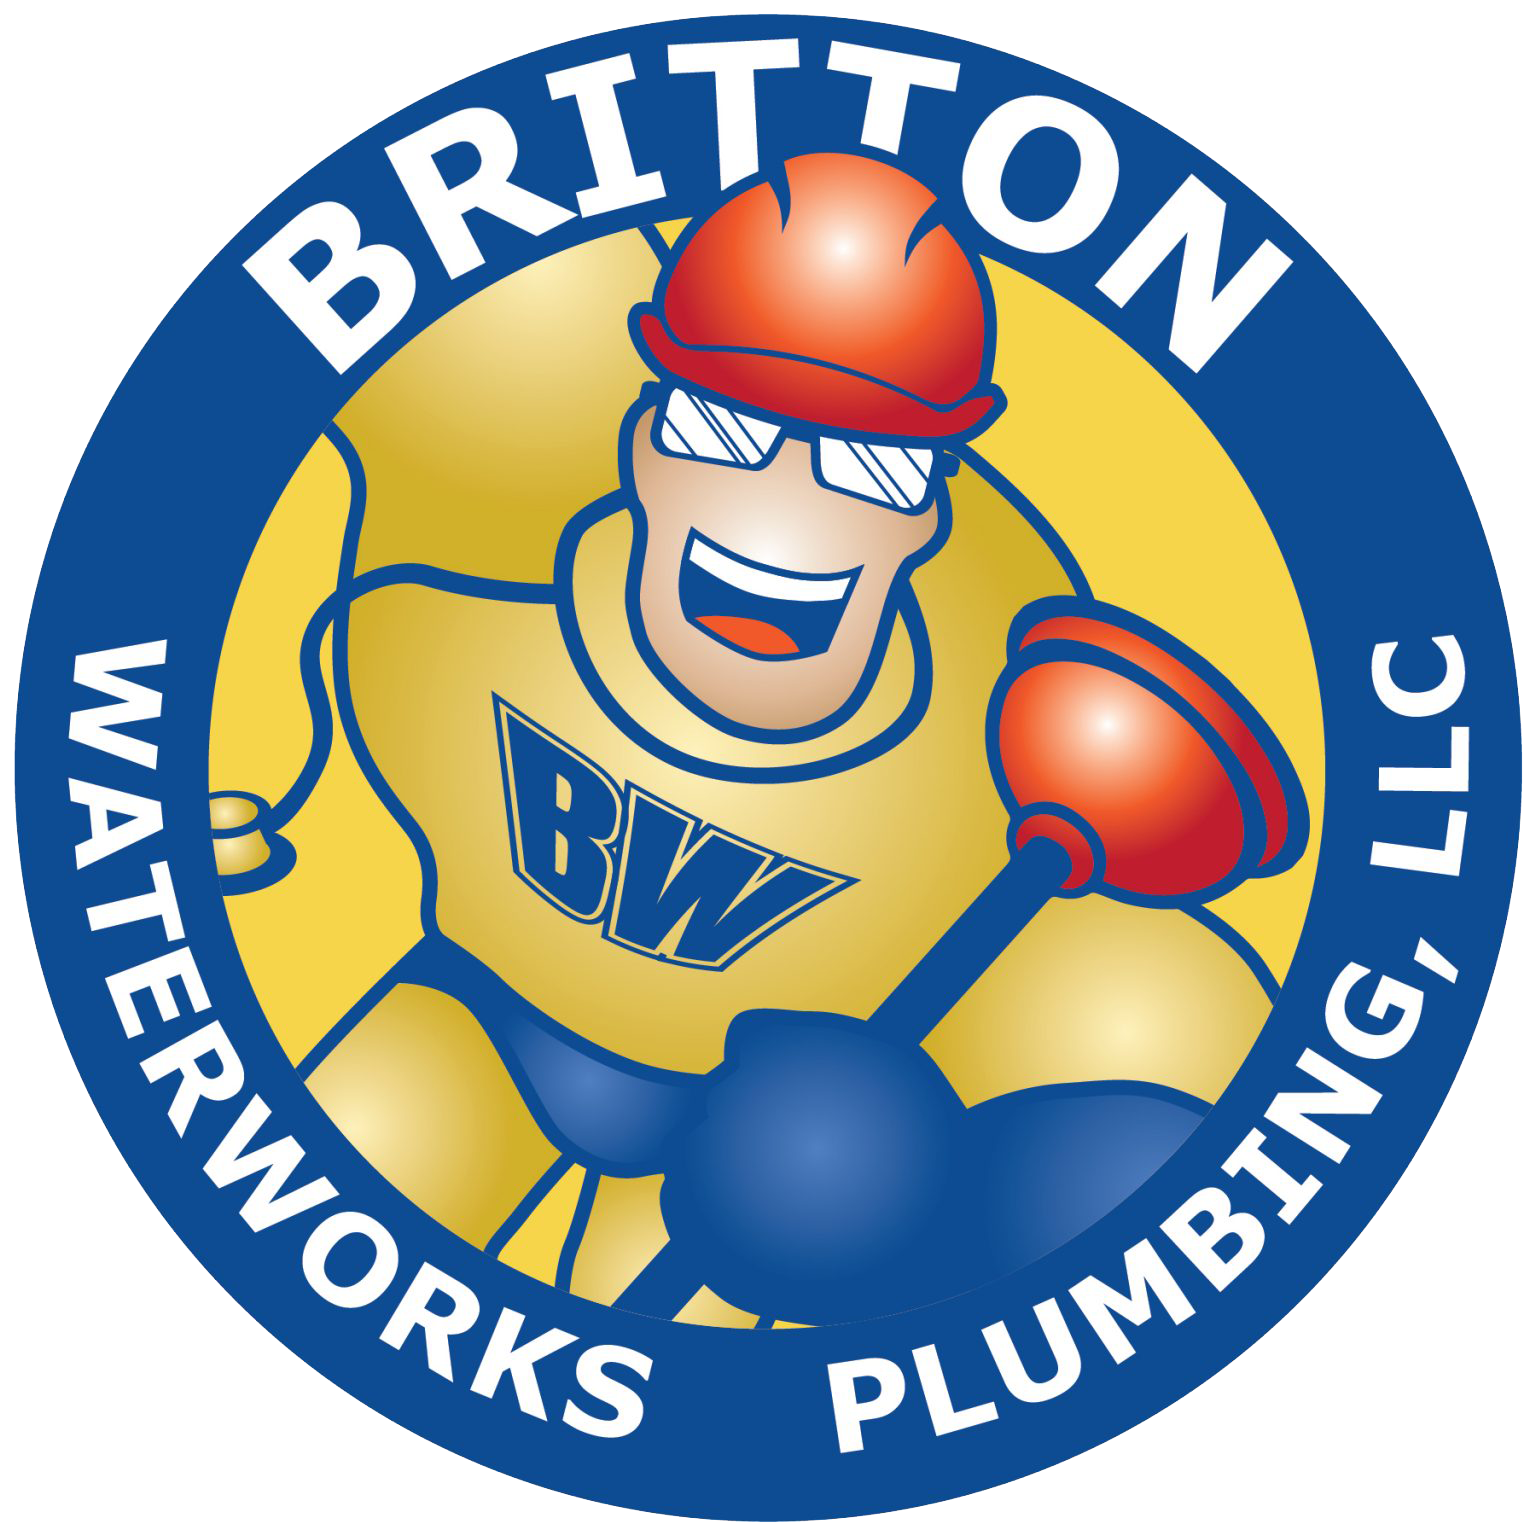 Britton WaterWorks Plumbing, LLC